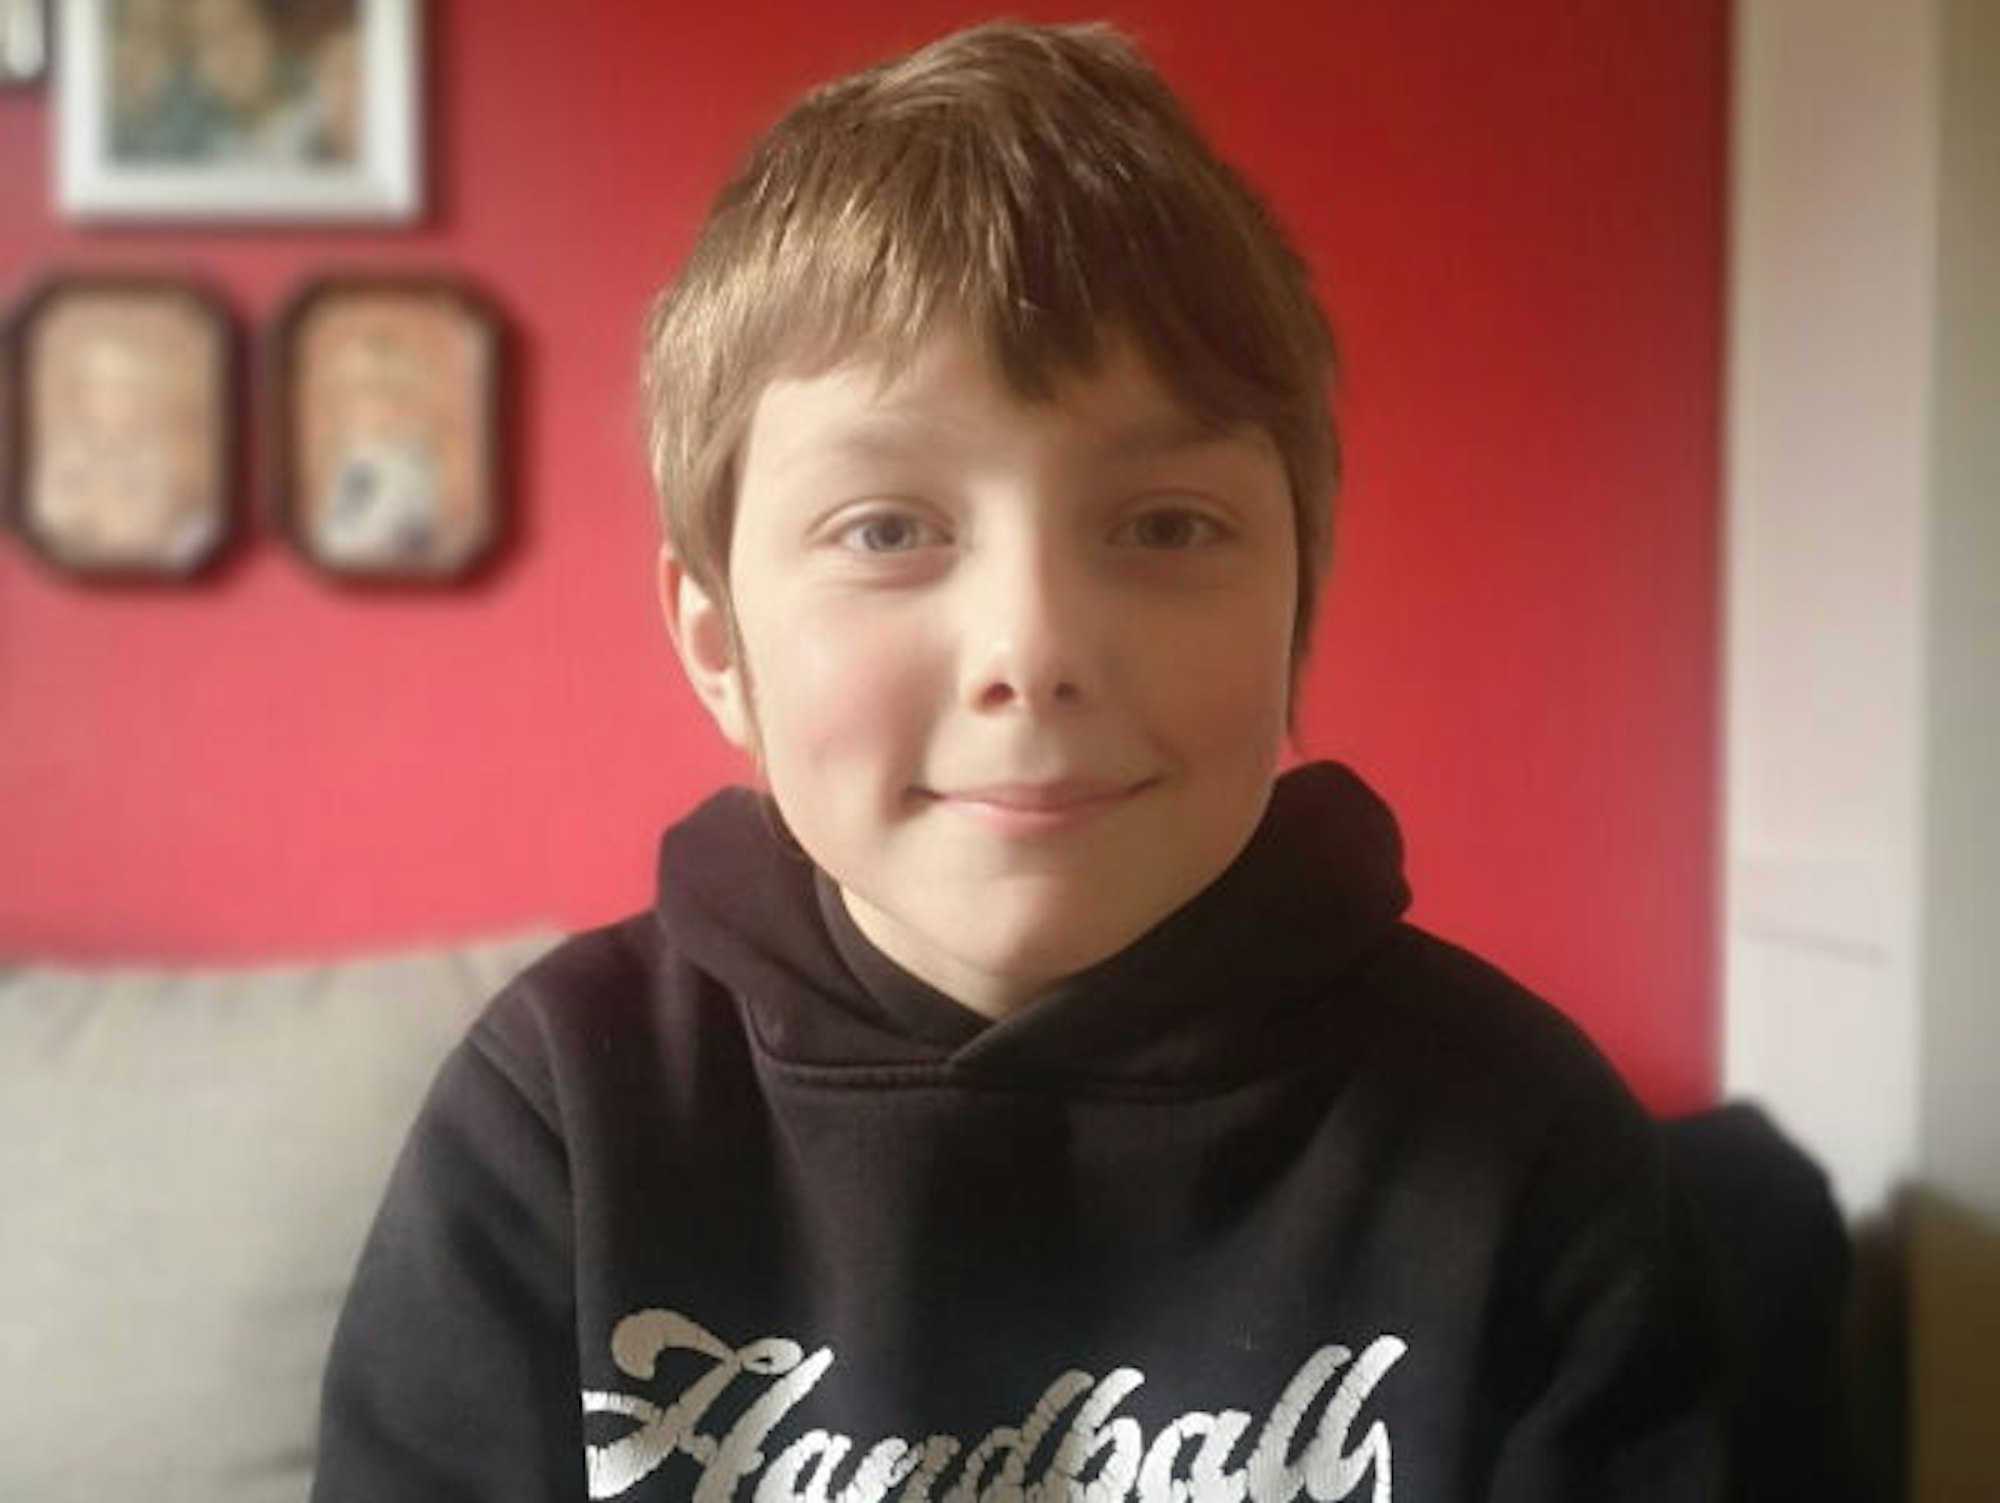 Emil (10), bald Gymnasiast